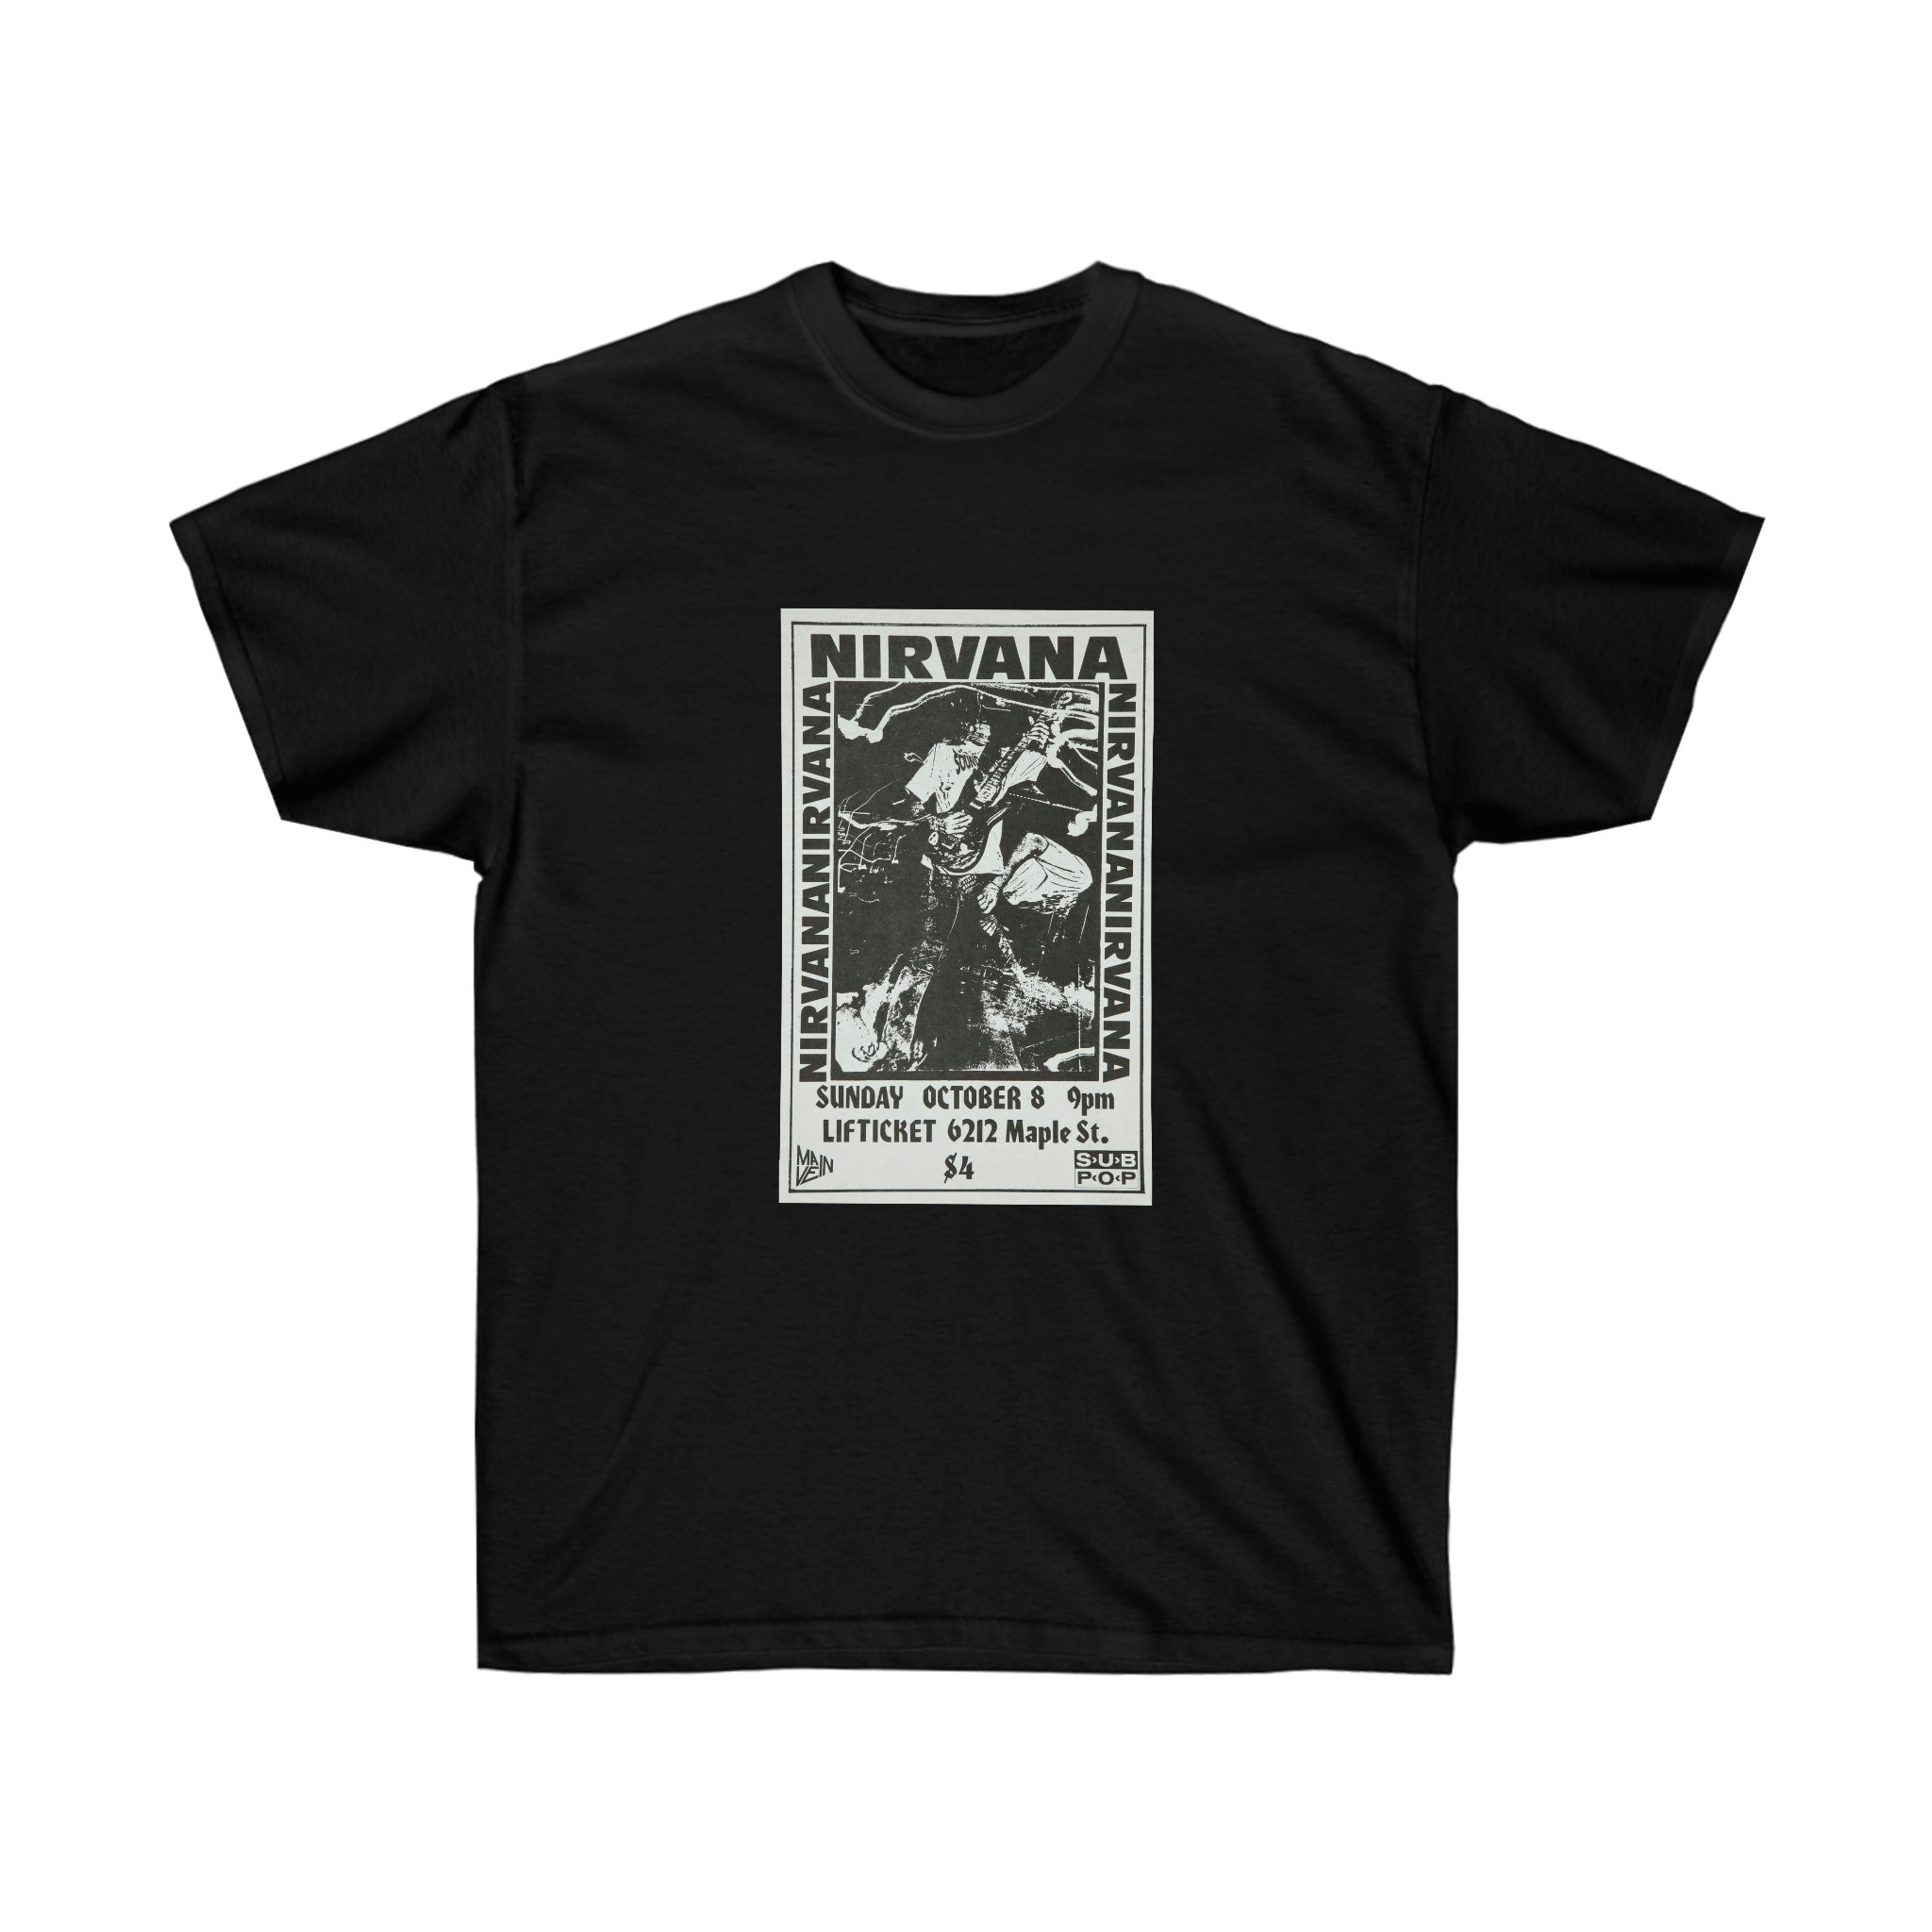 Discover Nirvana T-shirt | Nirvana in Utero